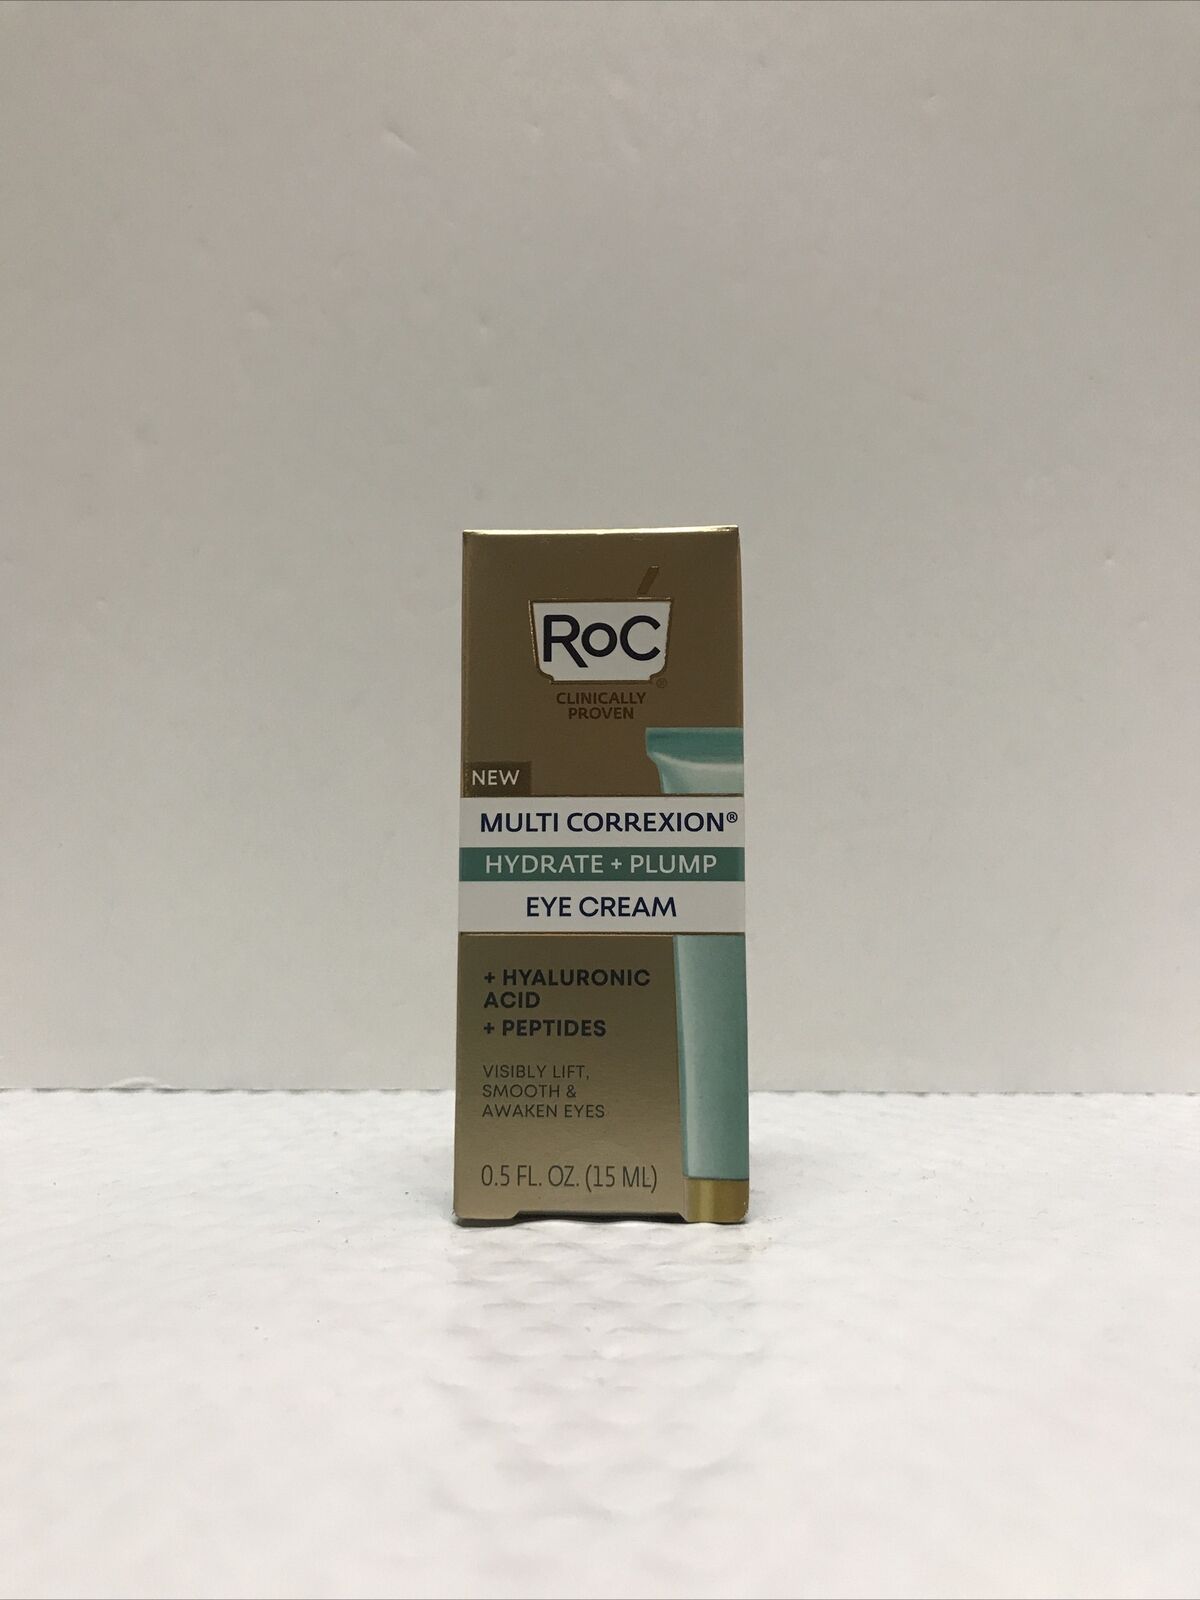 RoC Multi Correction Hydrate + Plump Eye Cream + Hyaluronic Acid + Peptides